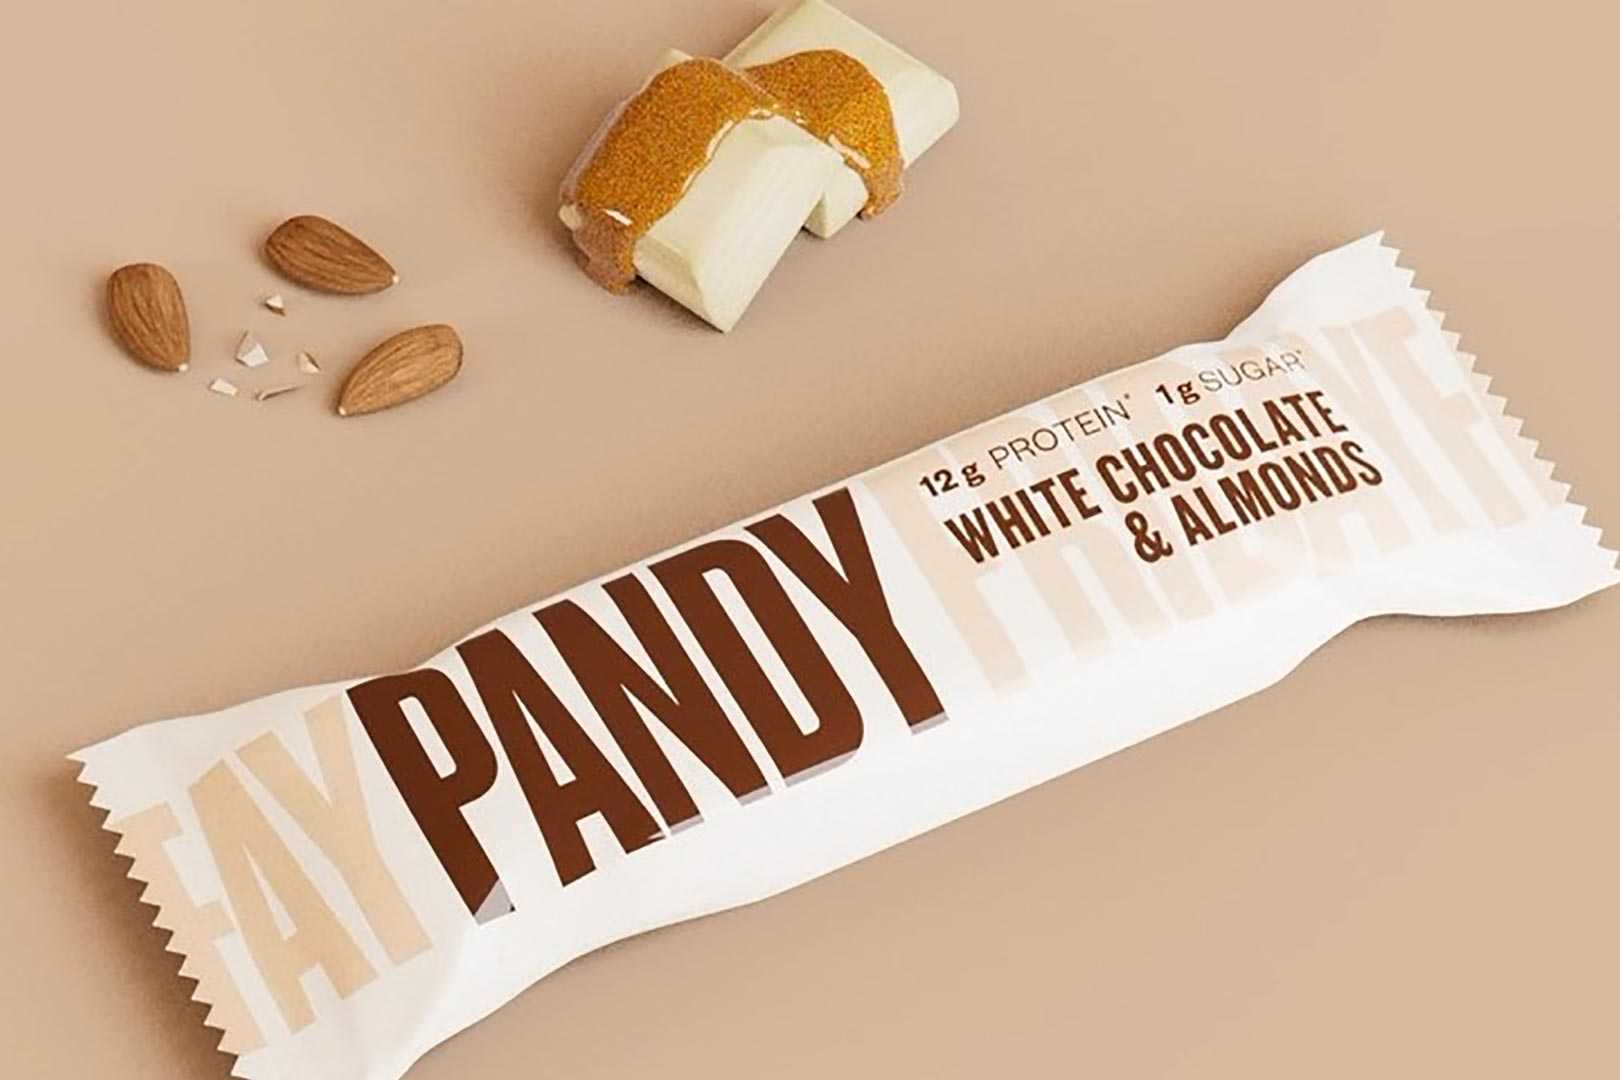 White Chocolate Almonds Pandy Protein Bar